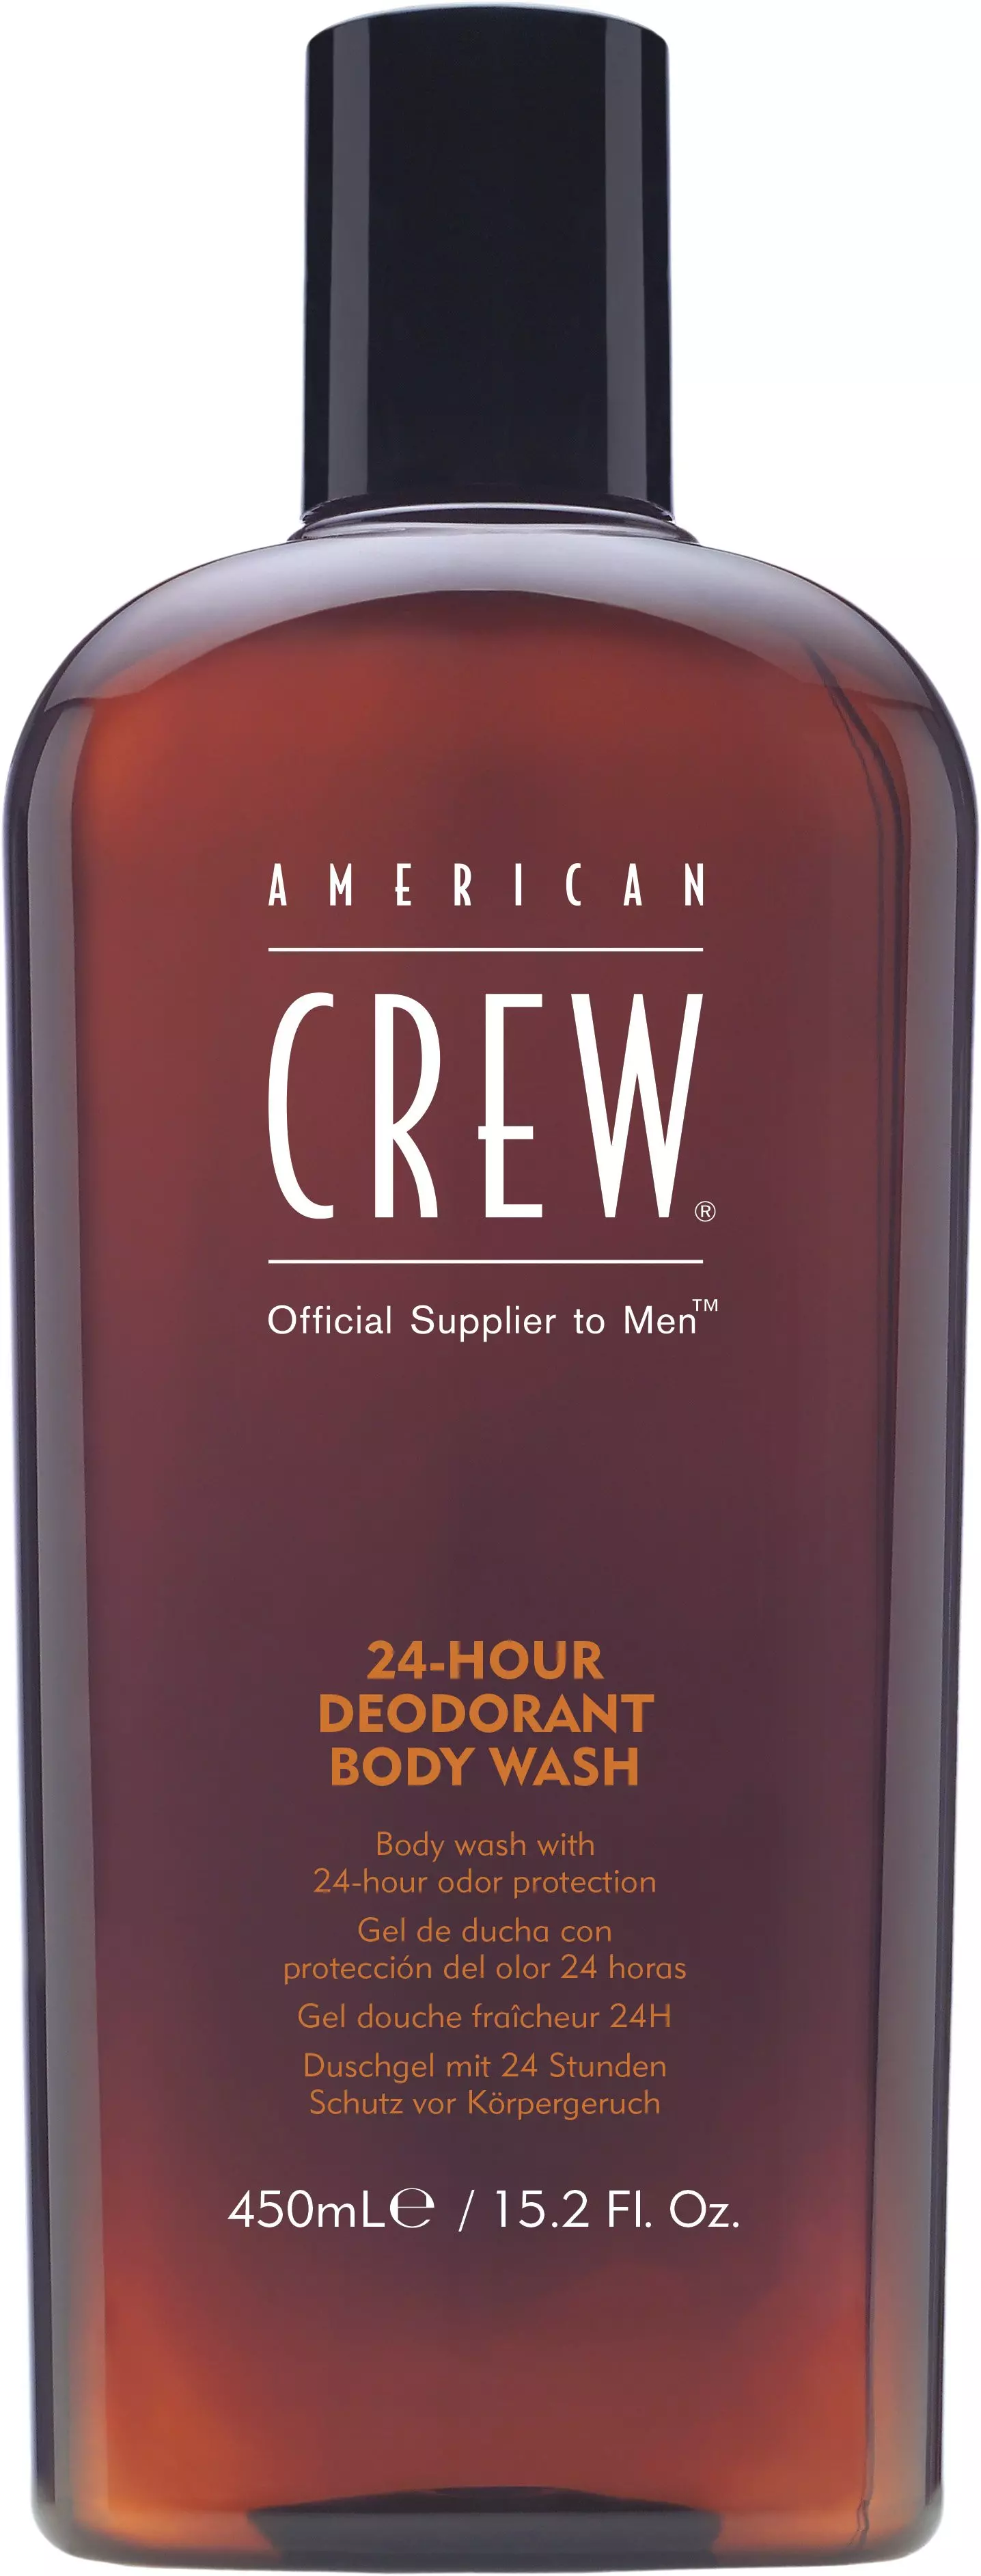 American Crew -Hour Deodorant Body Wash